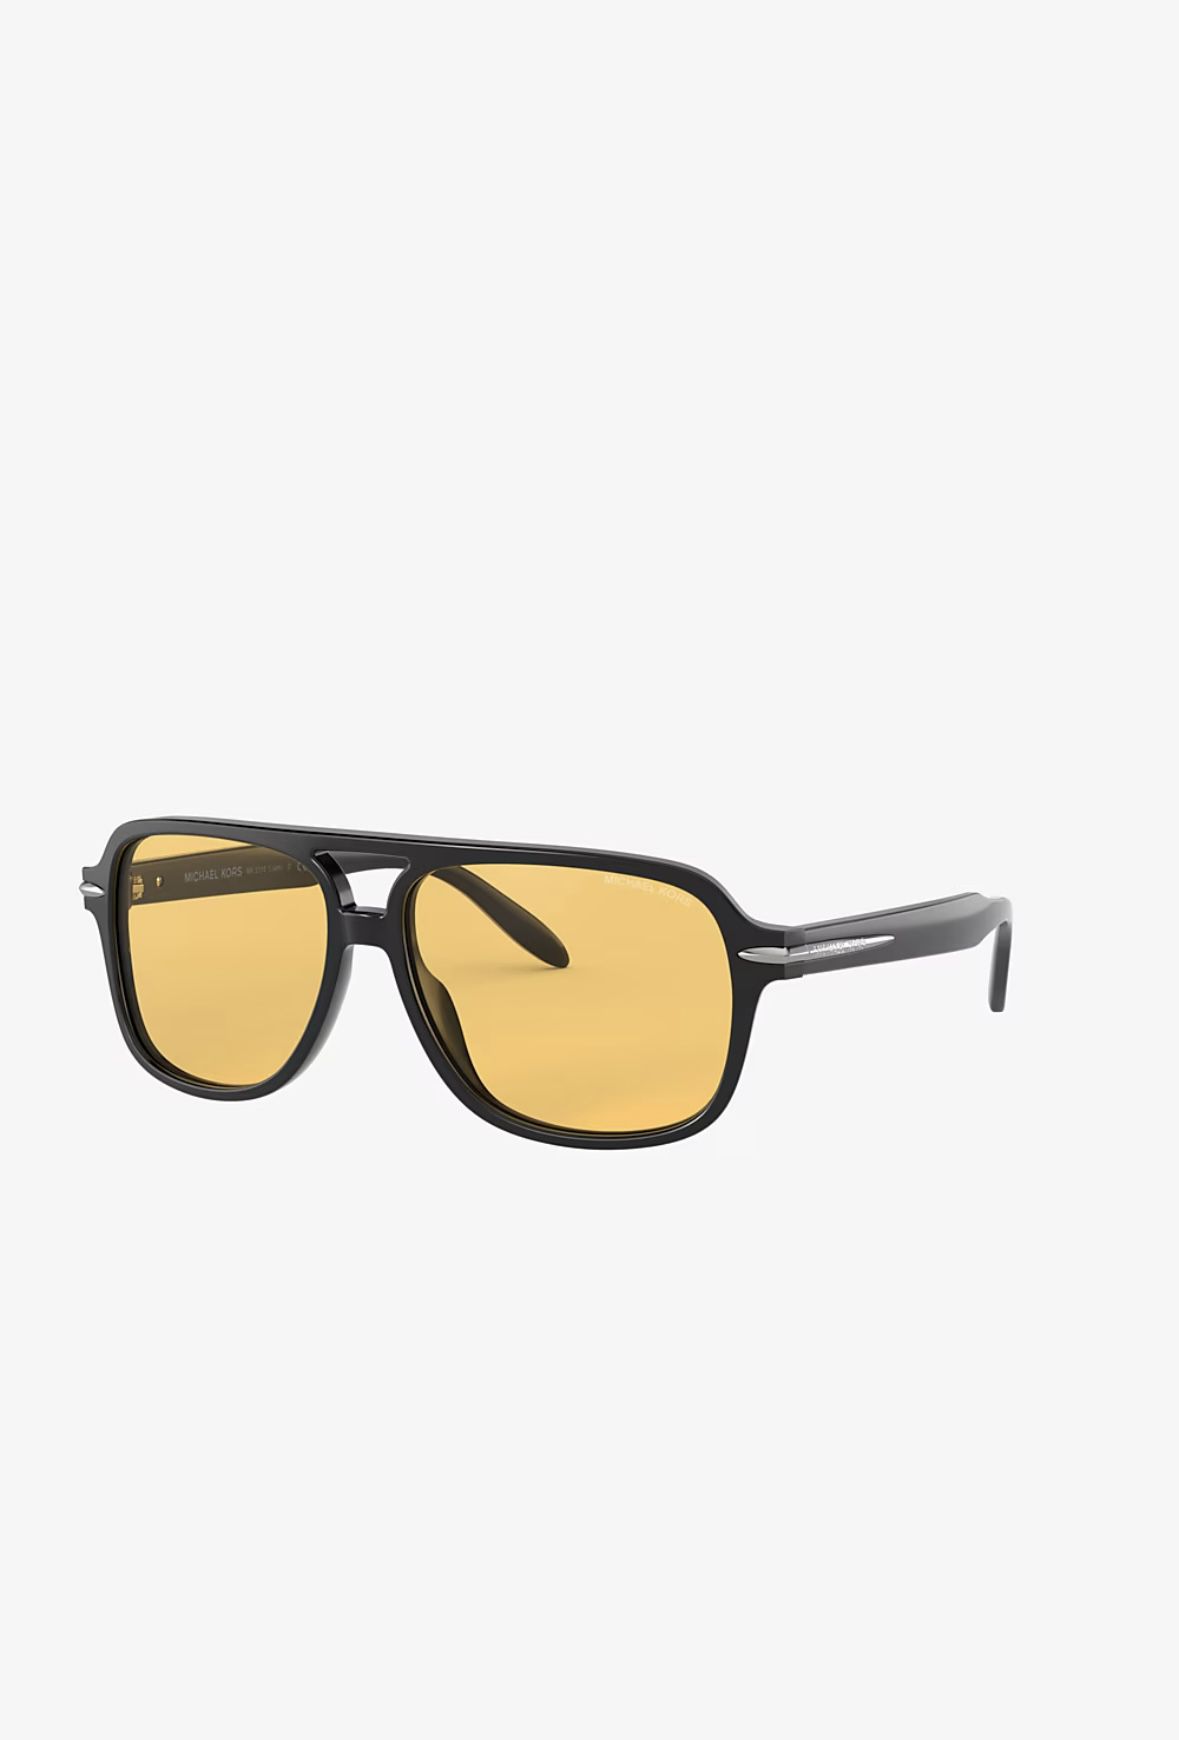 Michael Kors Liam Sunglasses